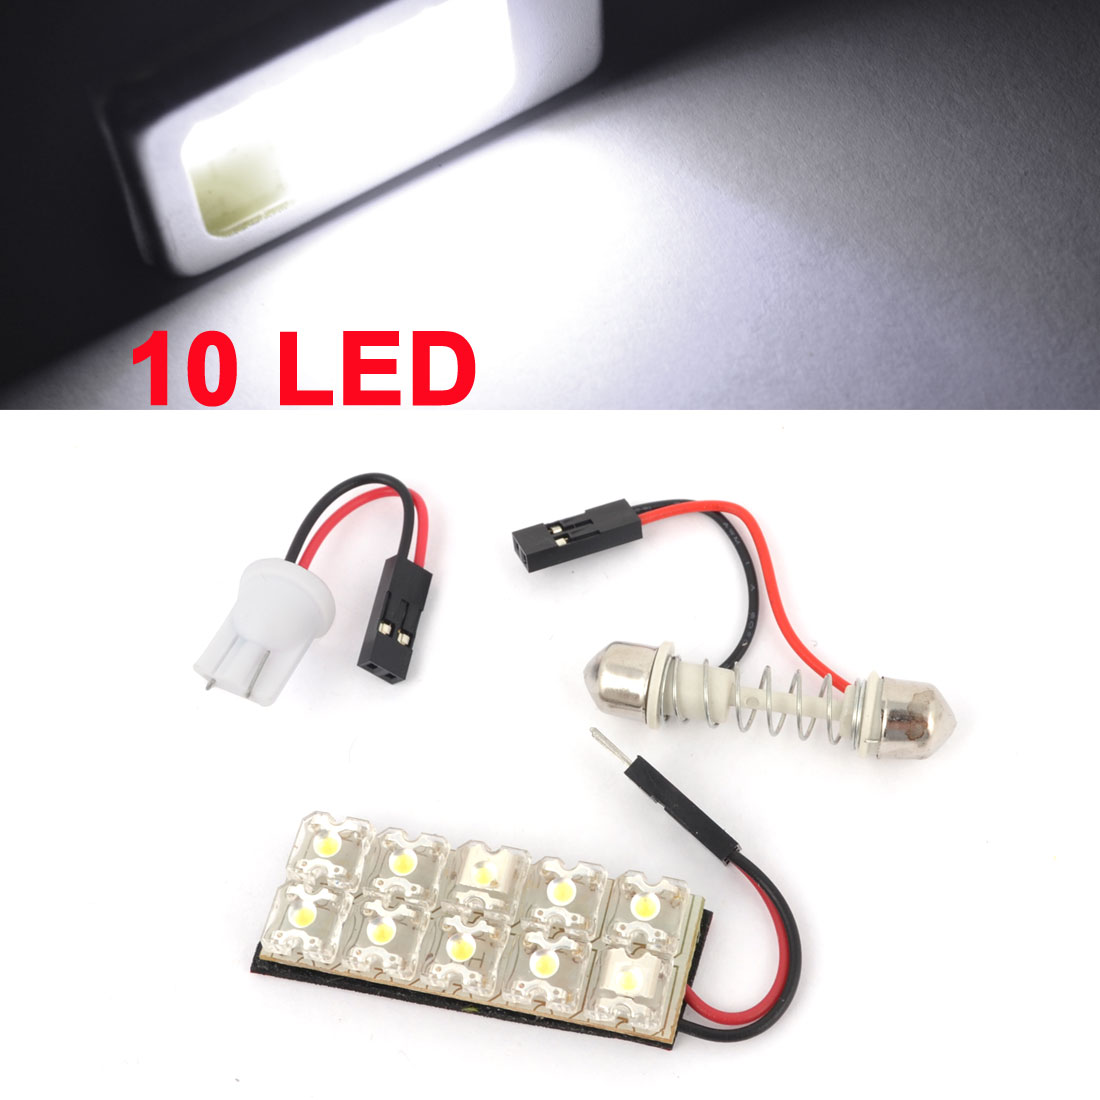     10-LED     T10  